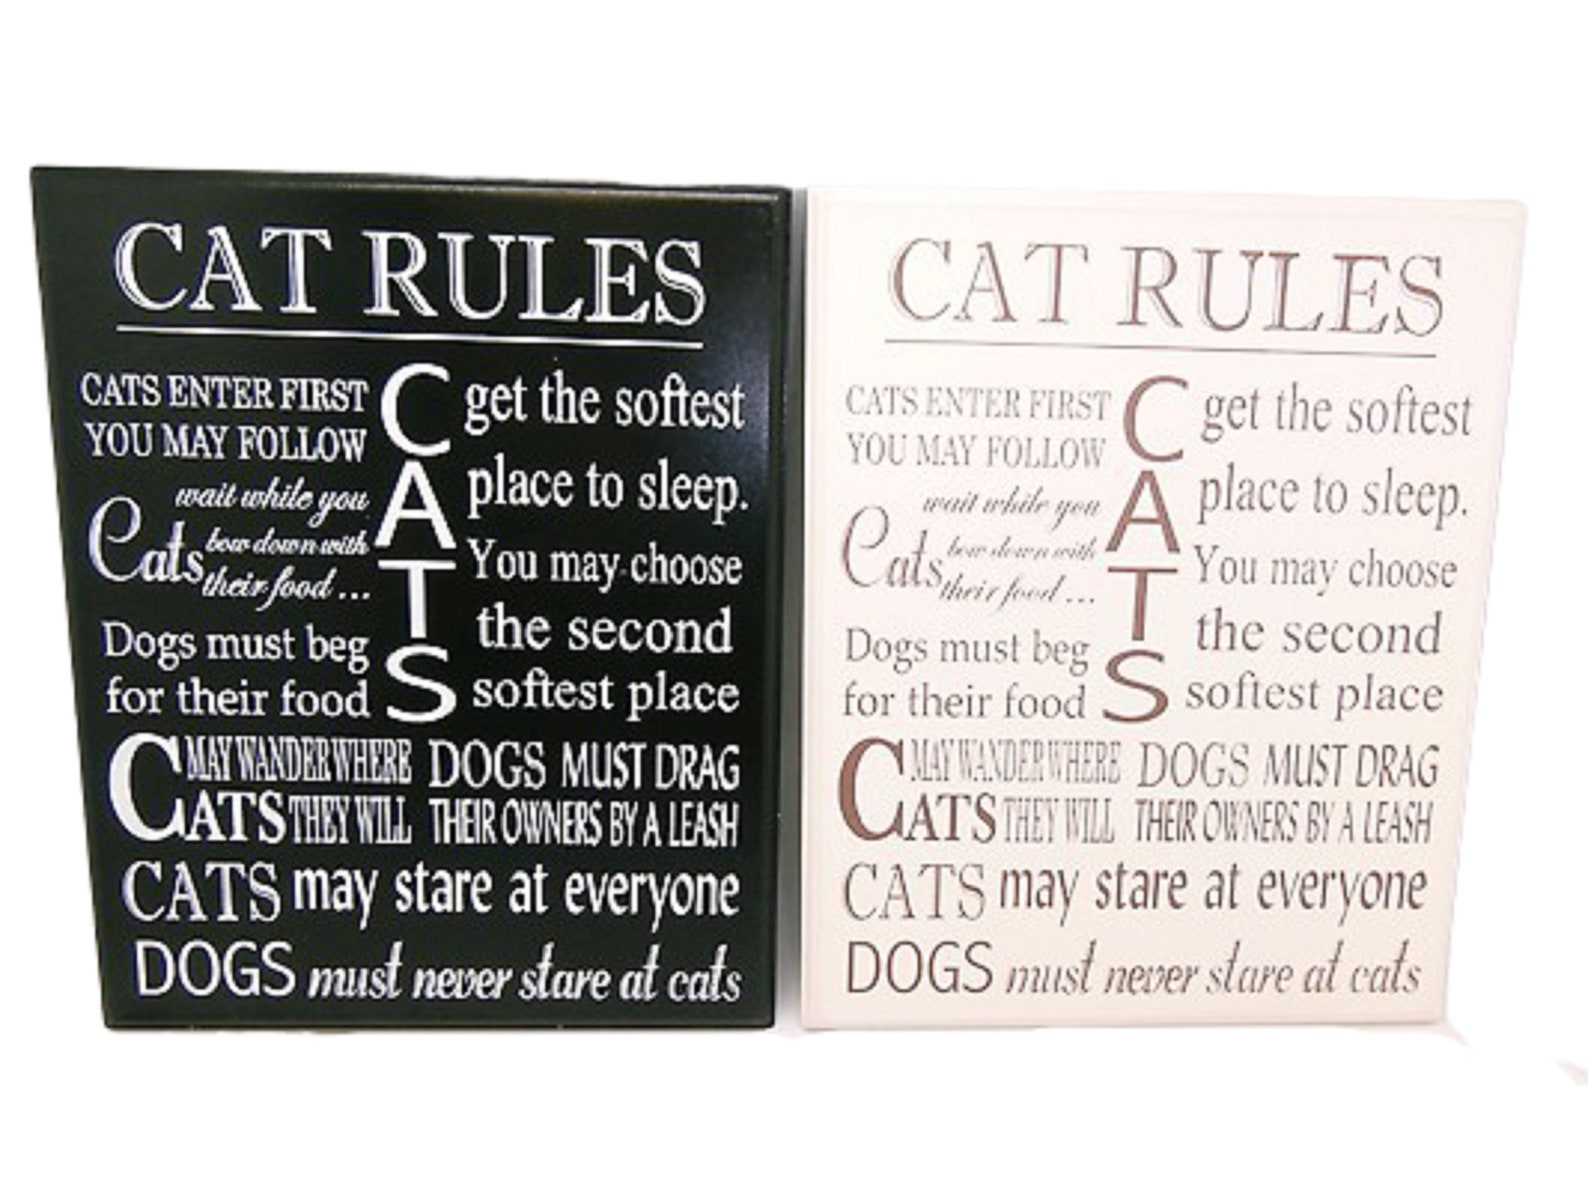 Pet rules